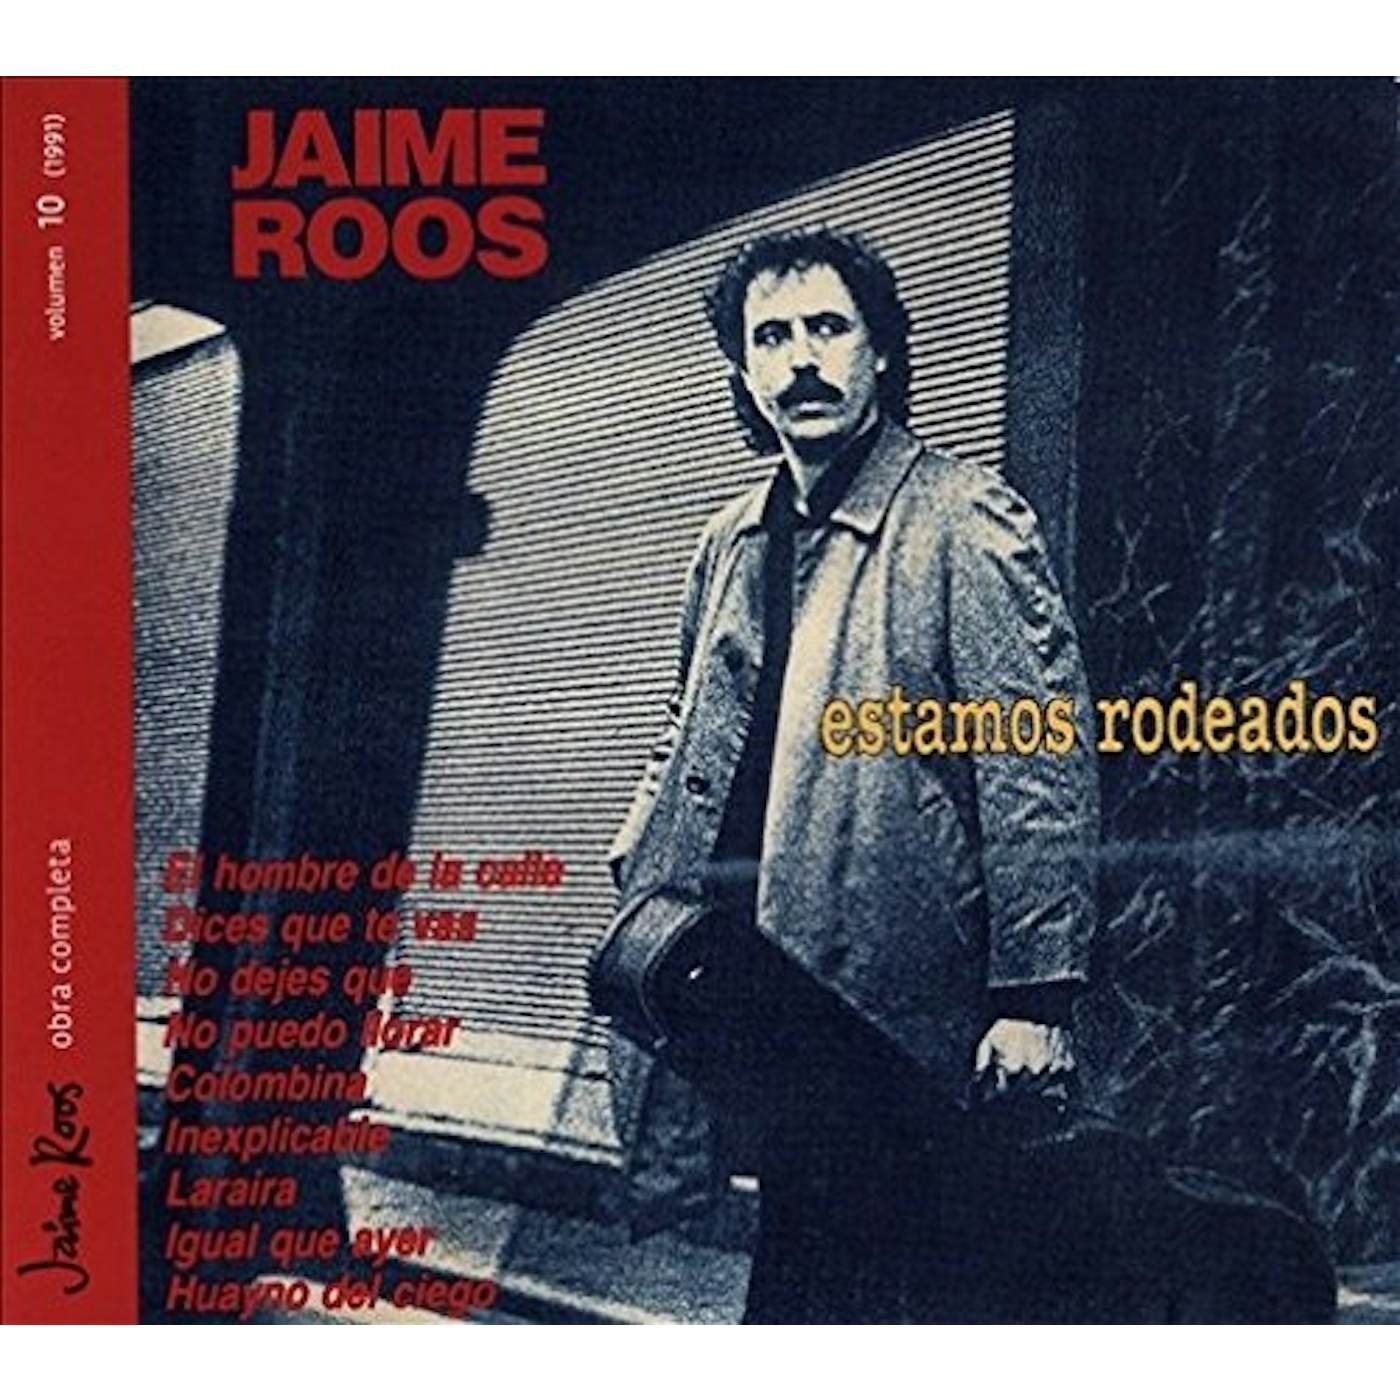 Jaime Roos ESTAMOS RODEADOS CD